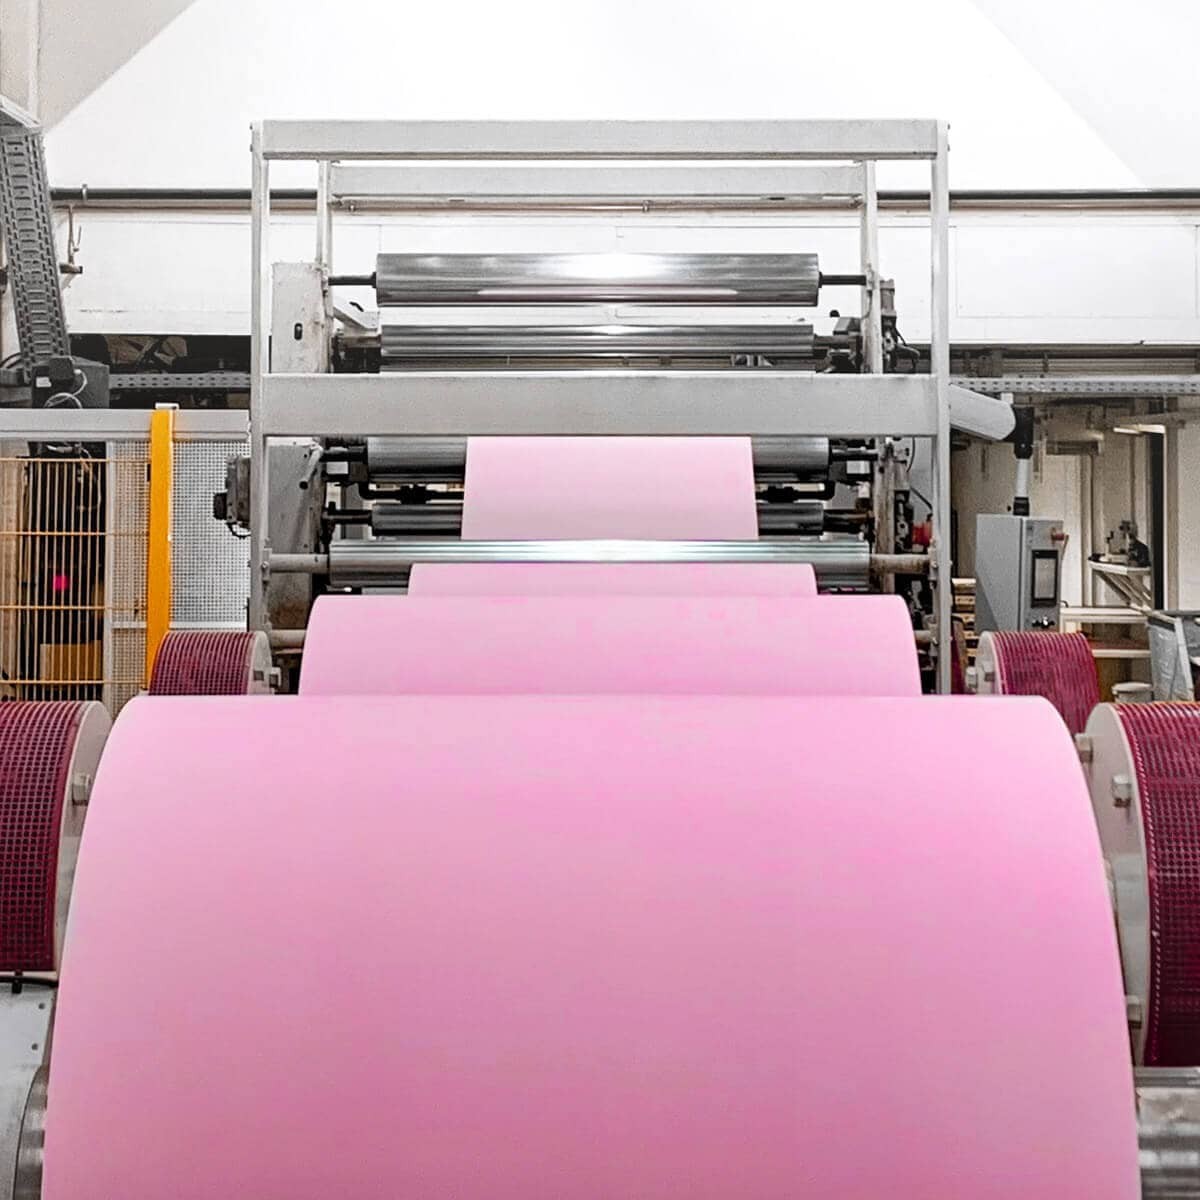 Reel-to-sheet lamination service example: cardboard pink